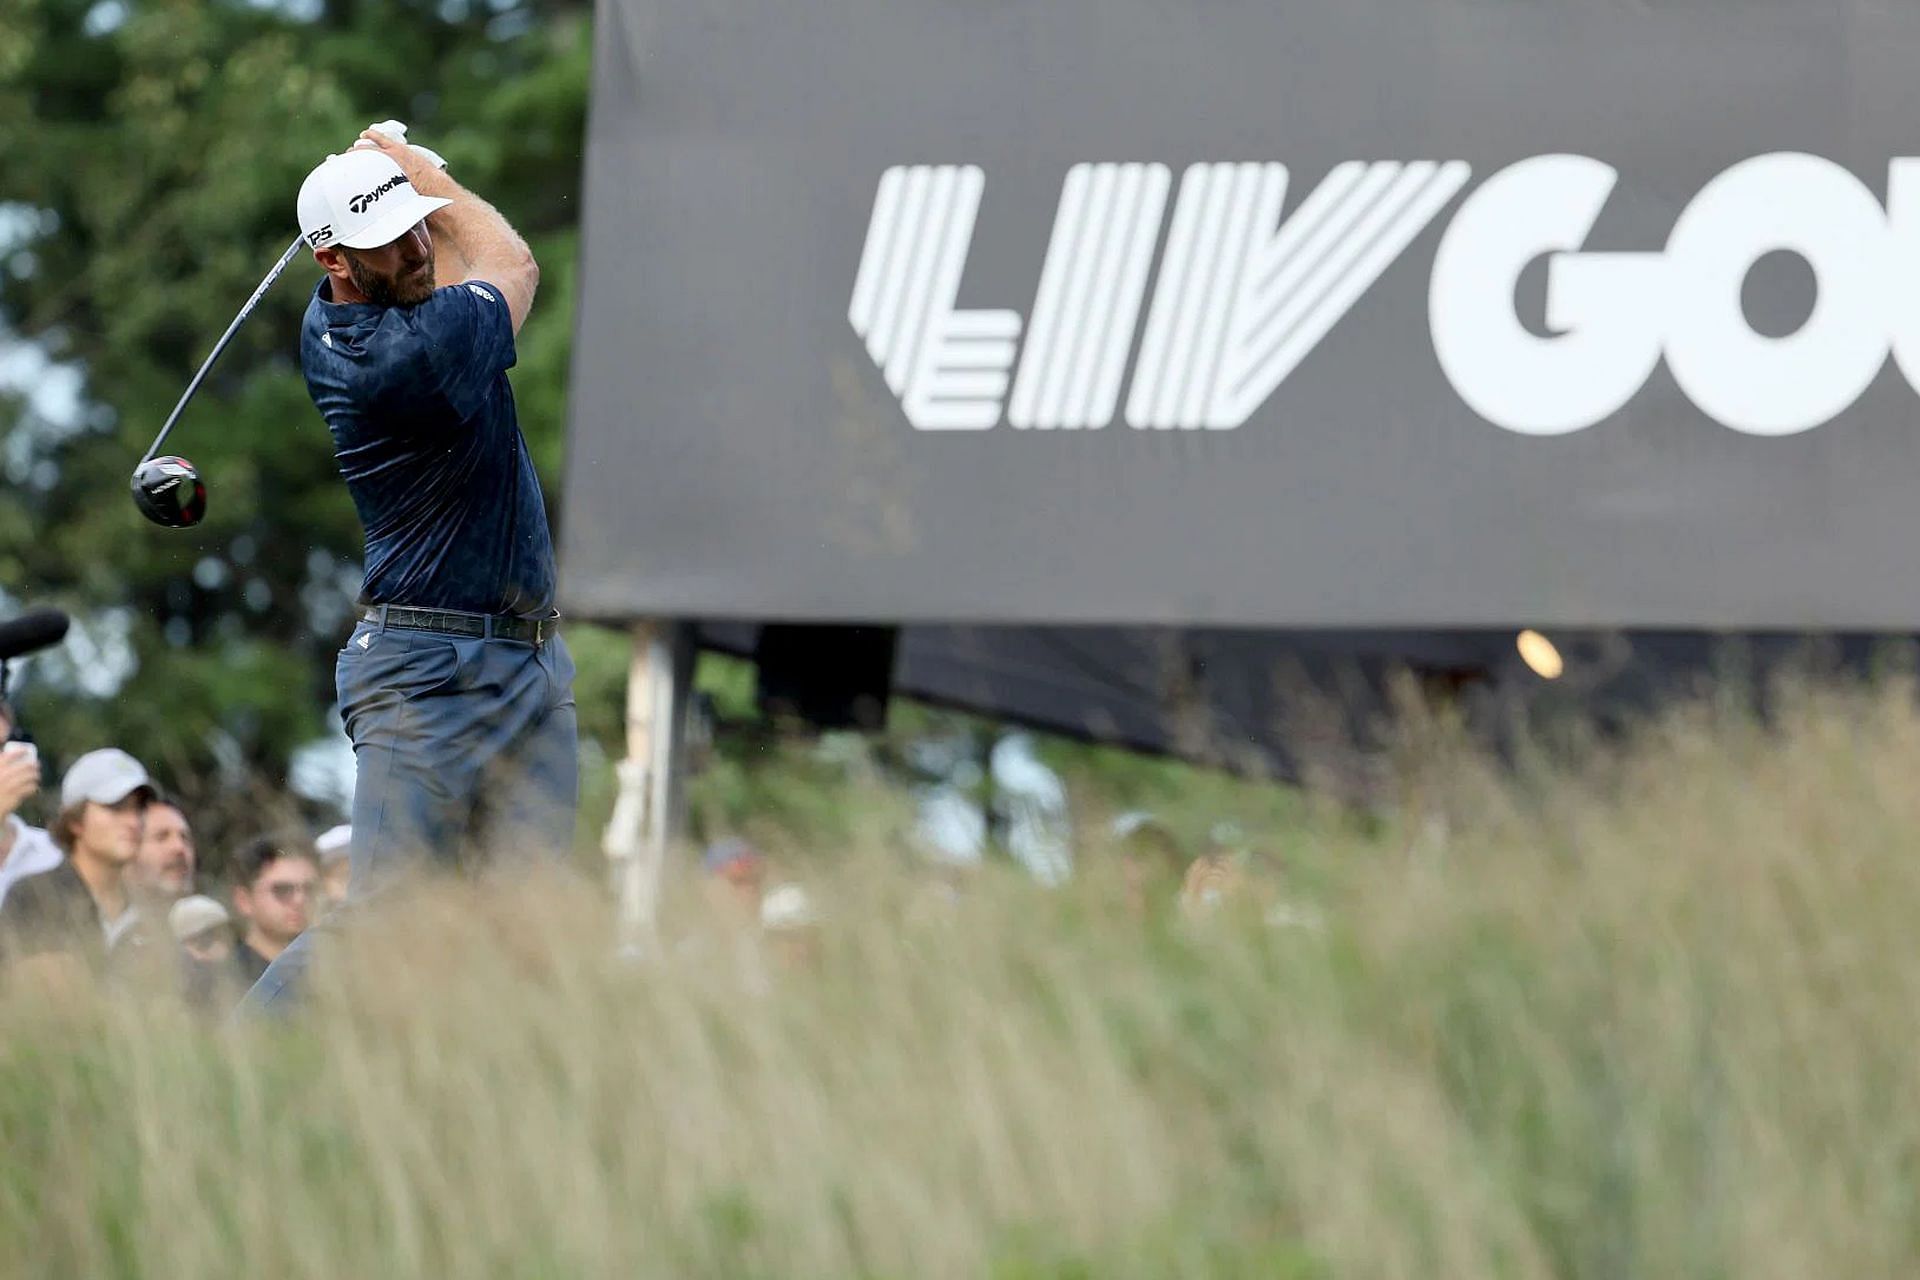 Dustin Johnson at the LIV Golf Invitational - Boston - Day Three (Image via Getty Images)